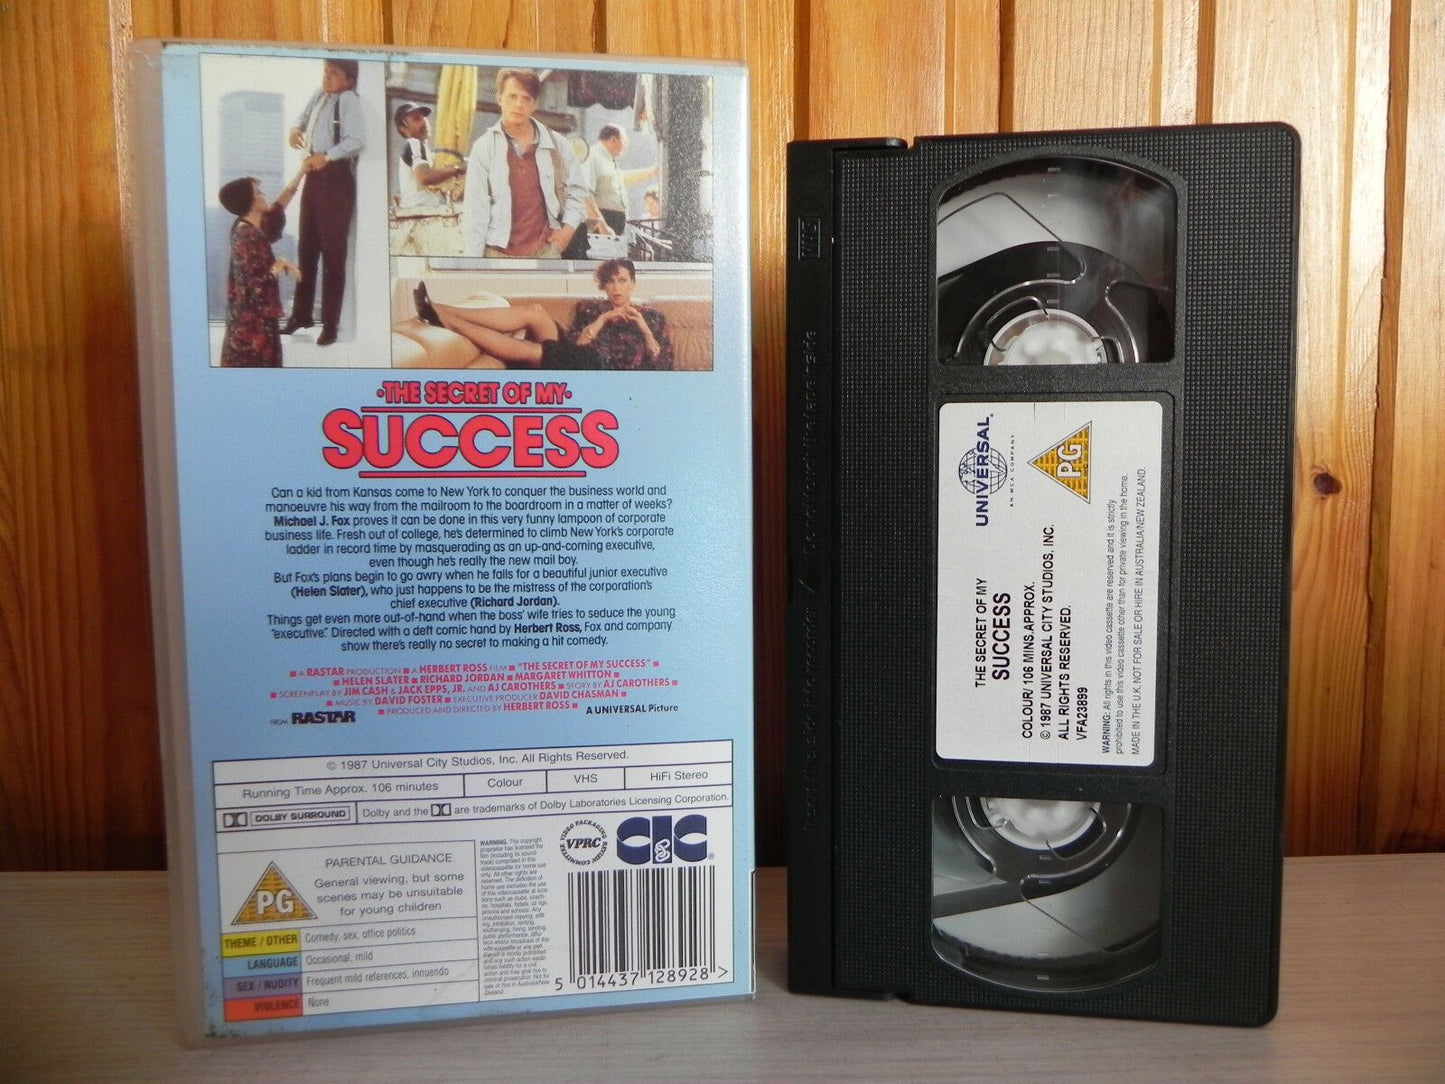 The Secret Of My Success - Comedy - Post-Cert - 1987 Comedy - Michael J. Fox VHS-